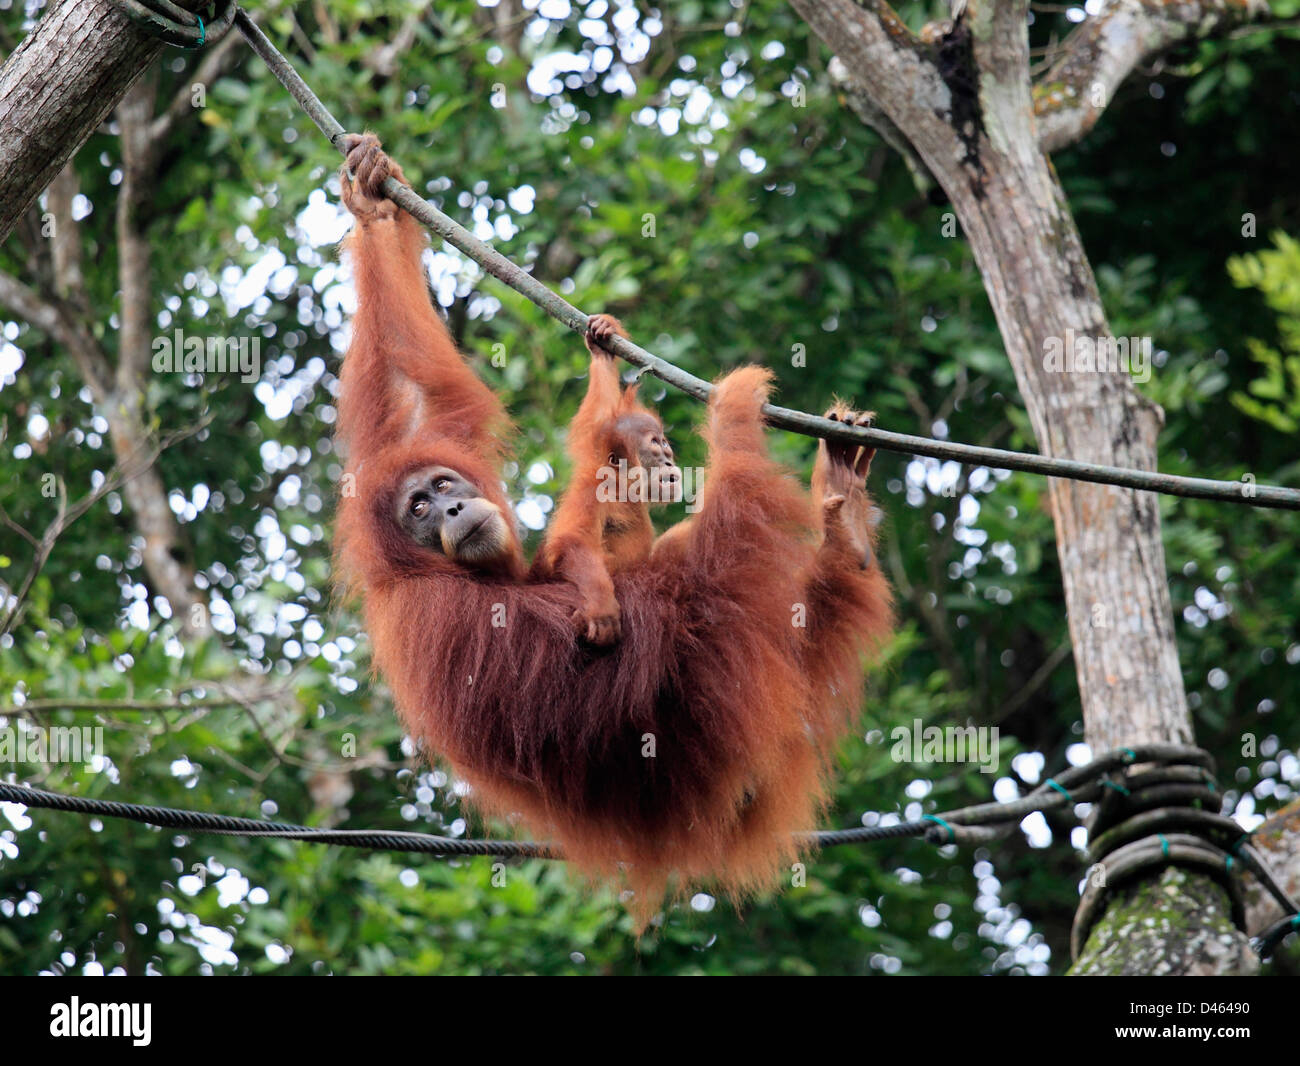 Orangután, Pongo pygmaeus, primates, Zoo de Singapur, Foto de stock